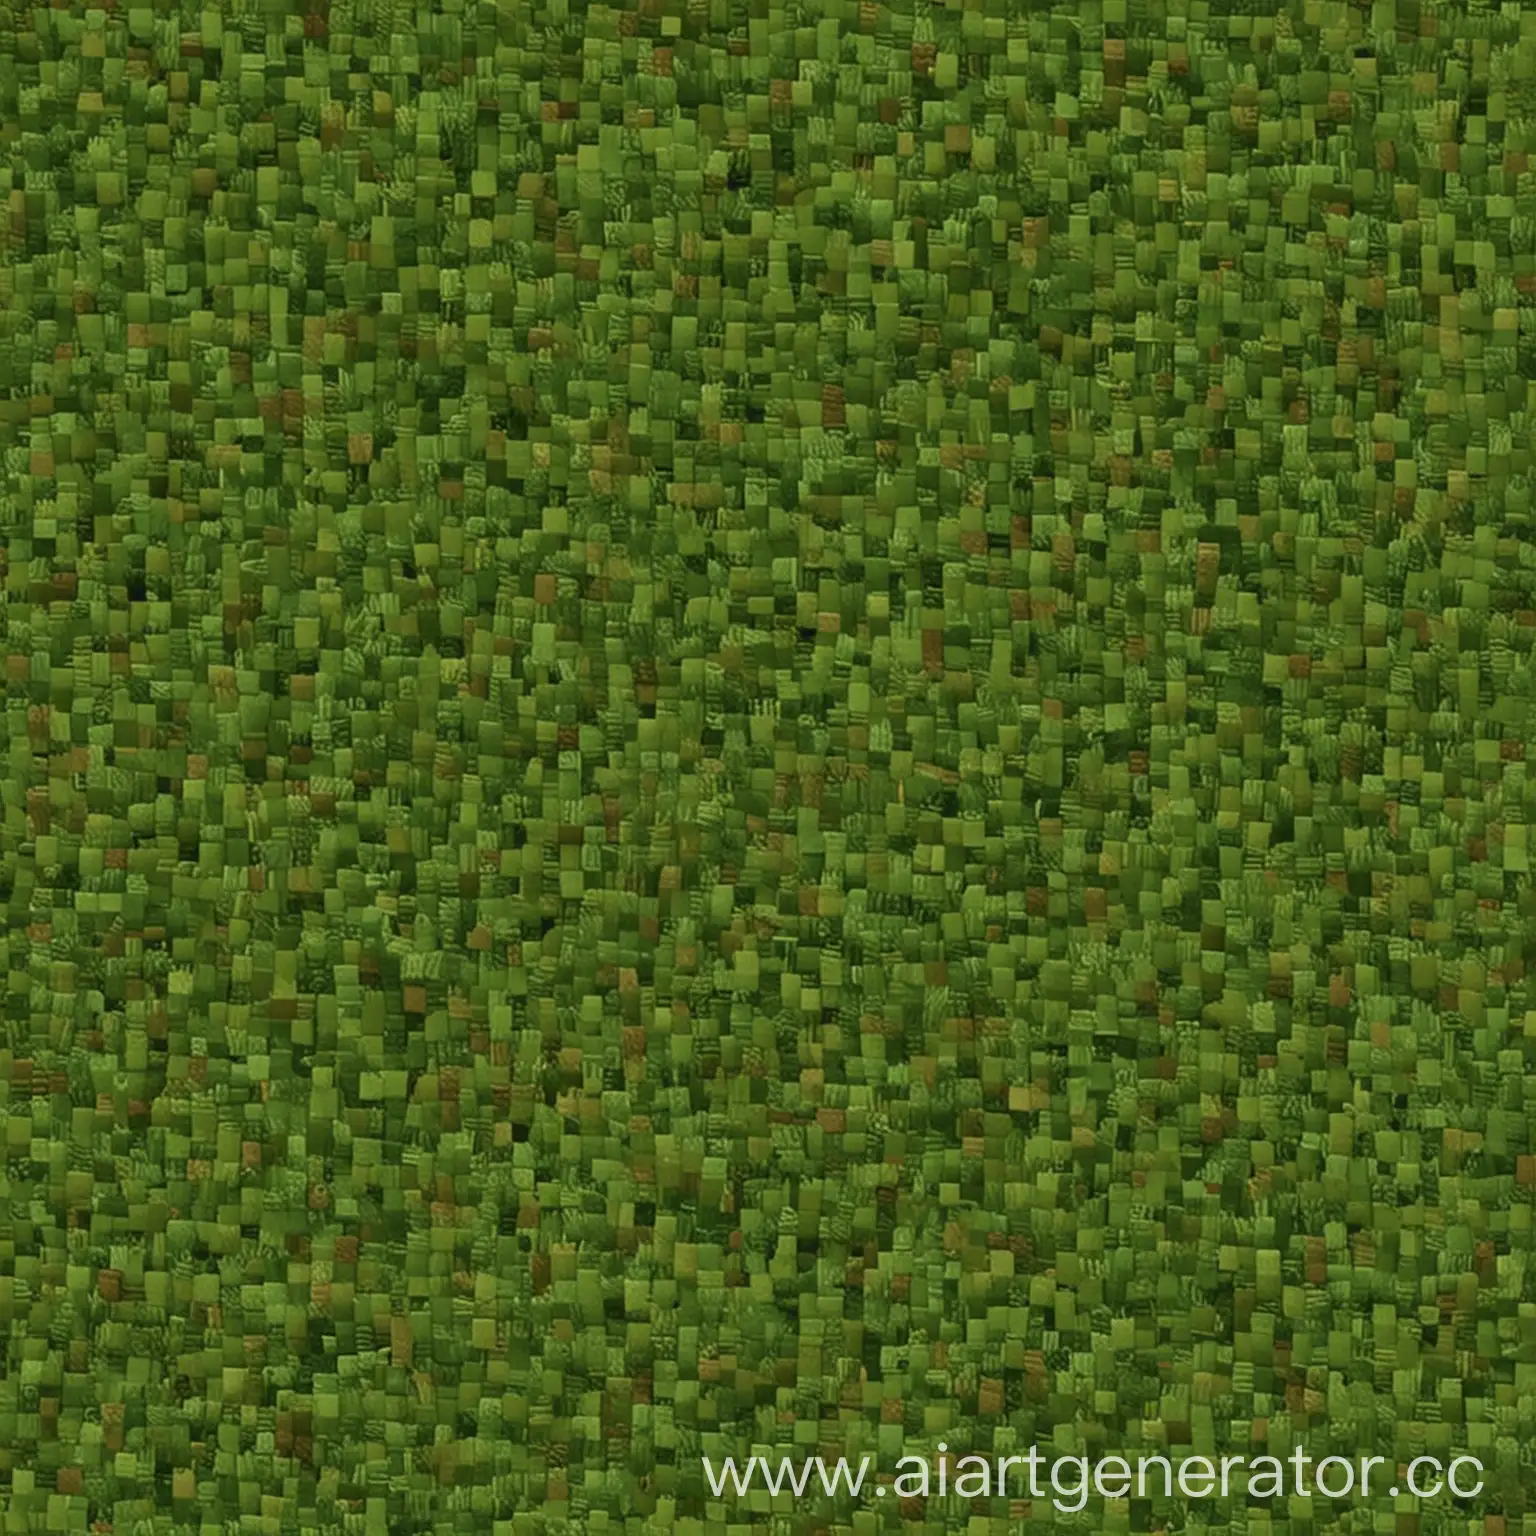 Eerie-MinecraftInspired-16x16-Pixel-Grass-Texture